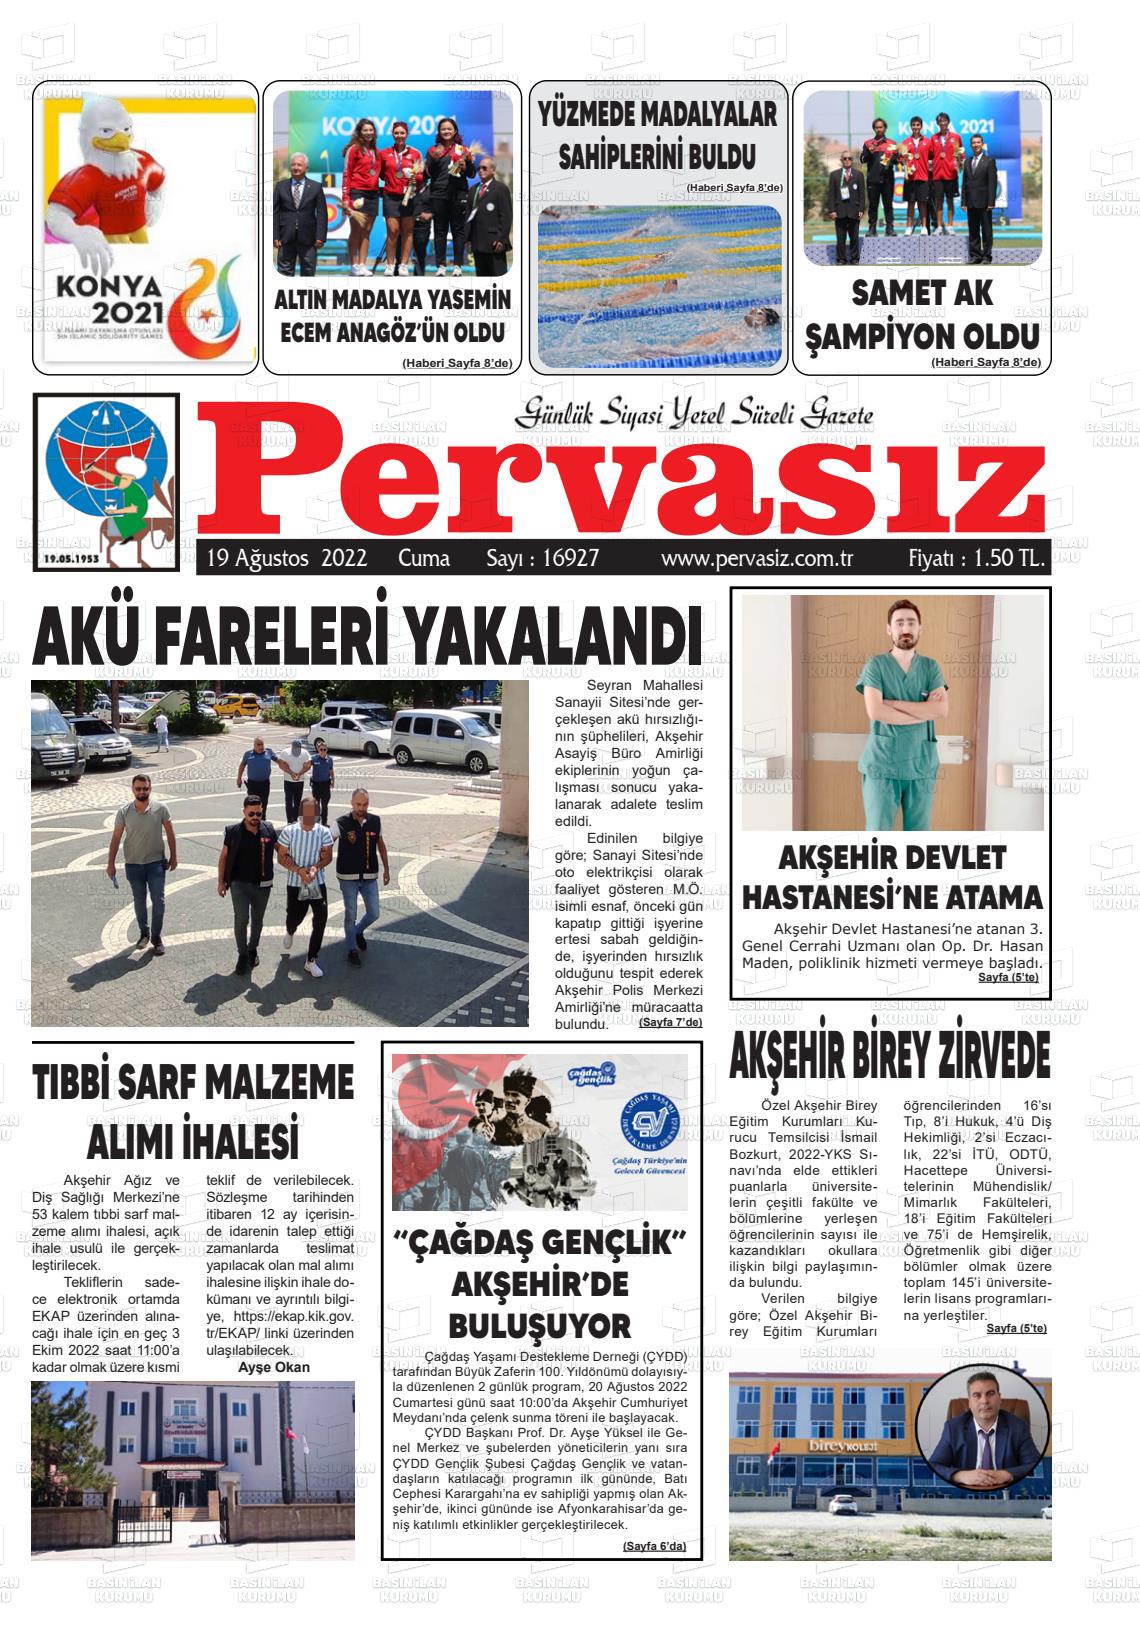 19 Ağustos 2022 Konya Pervasız Gazete Manşeti